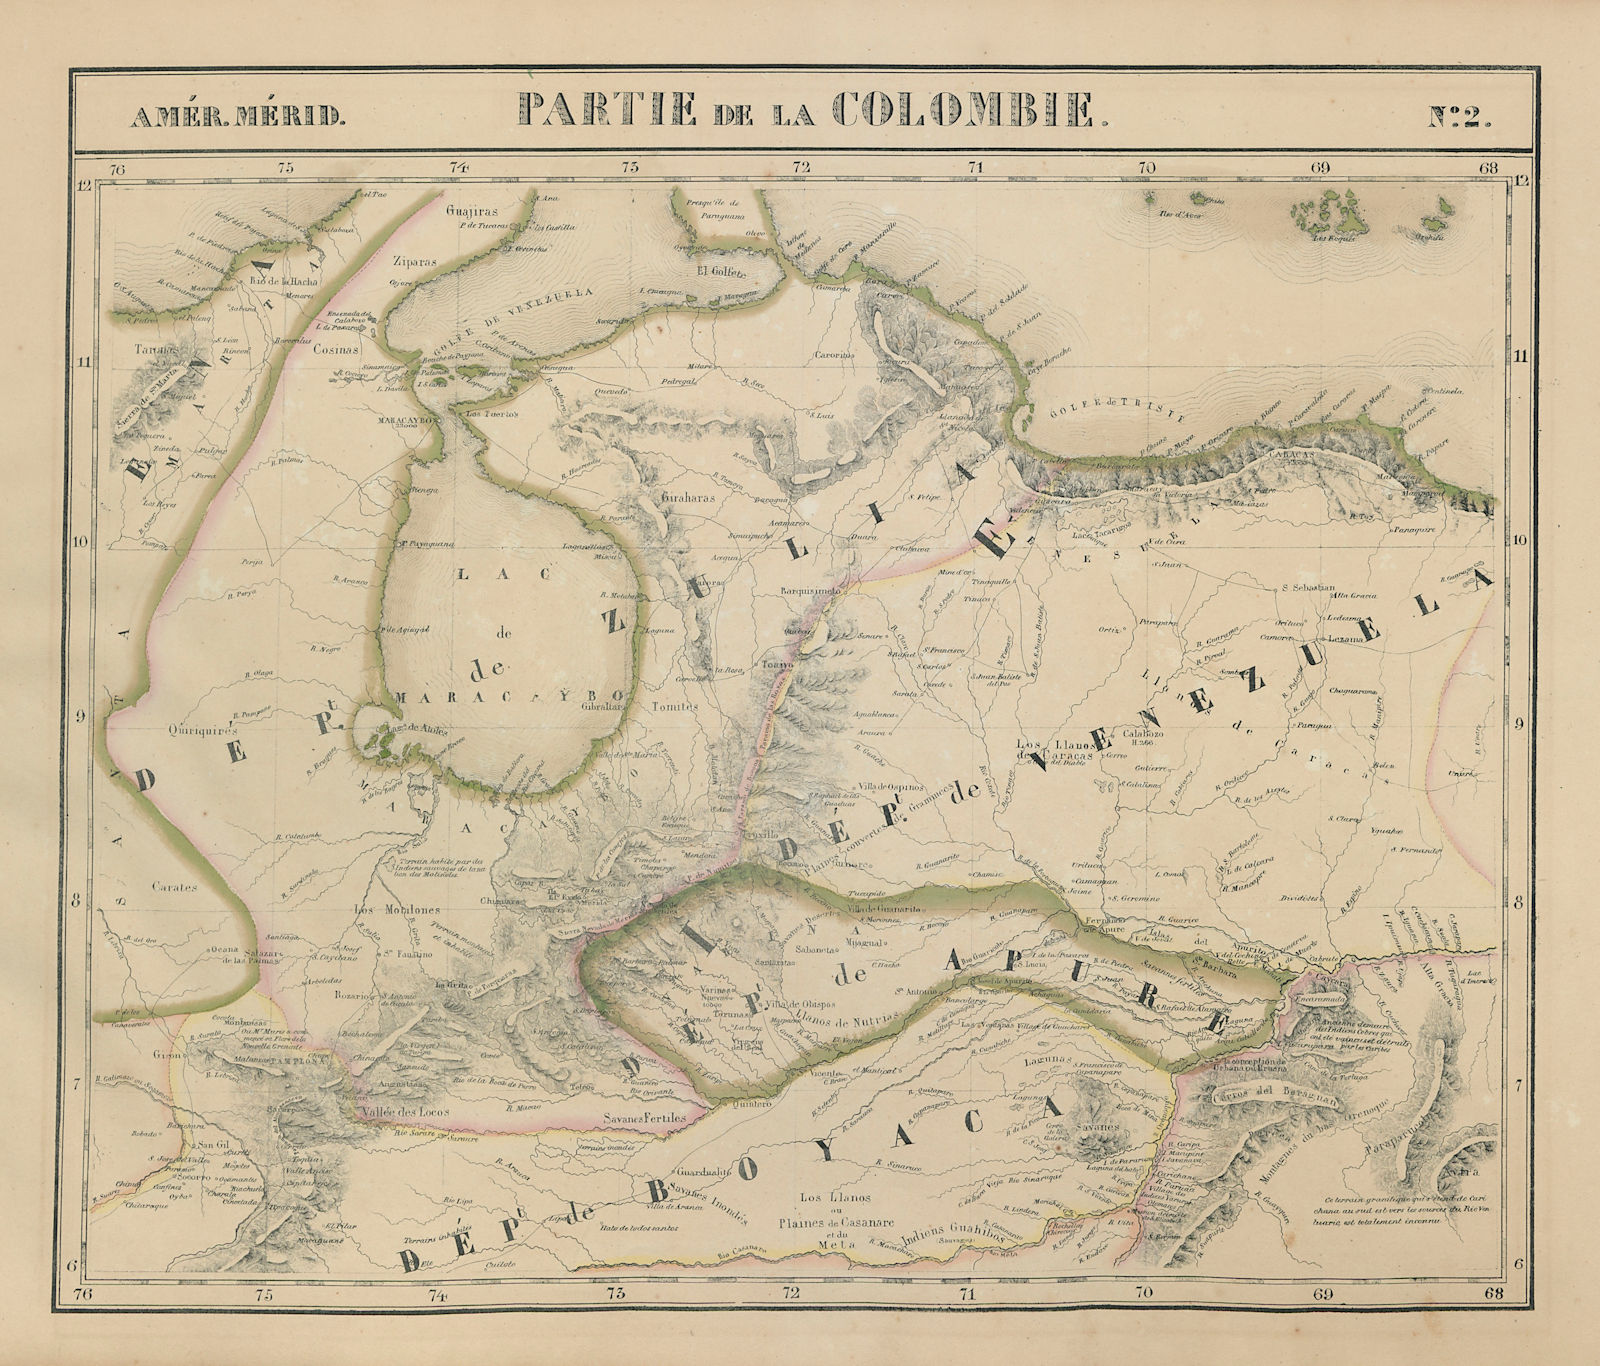 Amér. Mér. Colombie #2. Western Venezuela & NE Colombia. VANDERMAELEN 1827 map